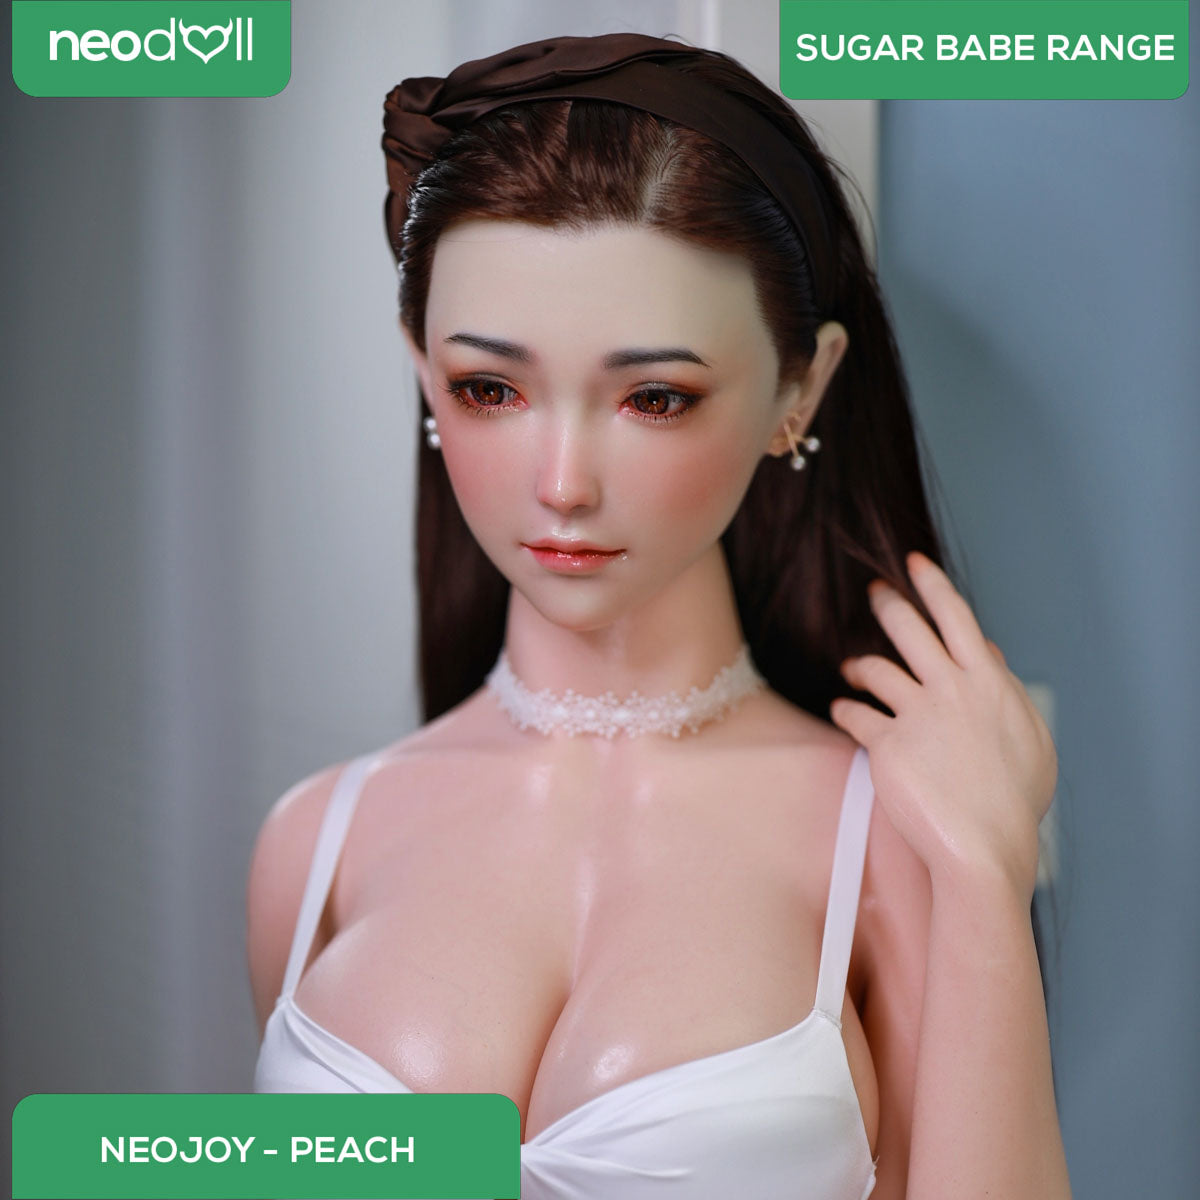 Neodoll Sugar Babe - Peach- Silicone TPE Hybrid Sex Doll - Gel Breast - Uterus - 157cm - Silicone Colour